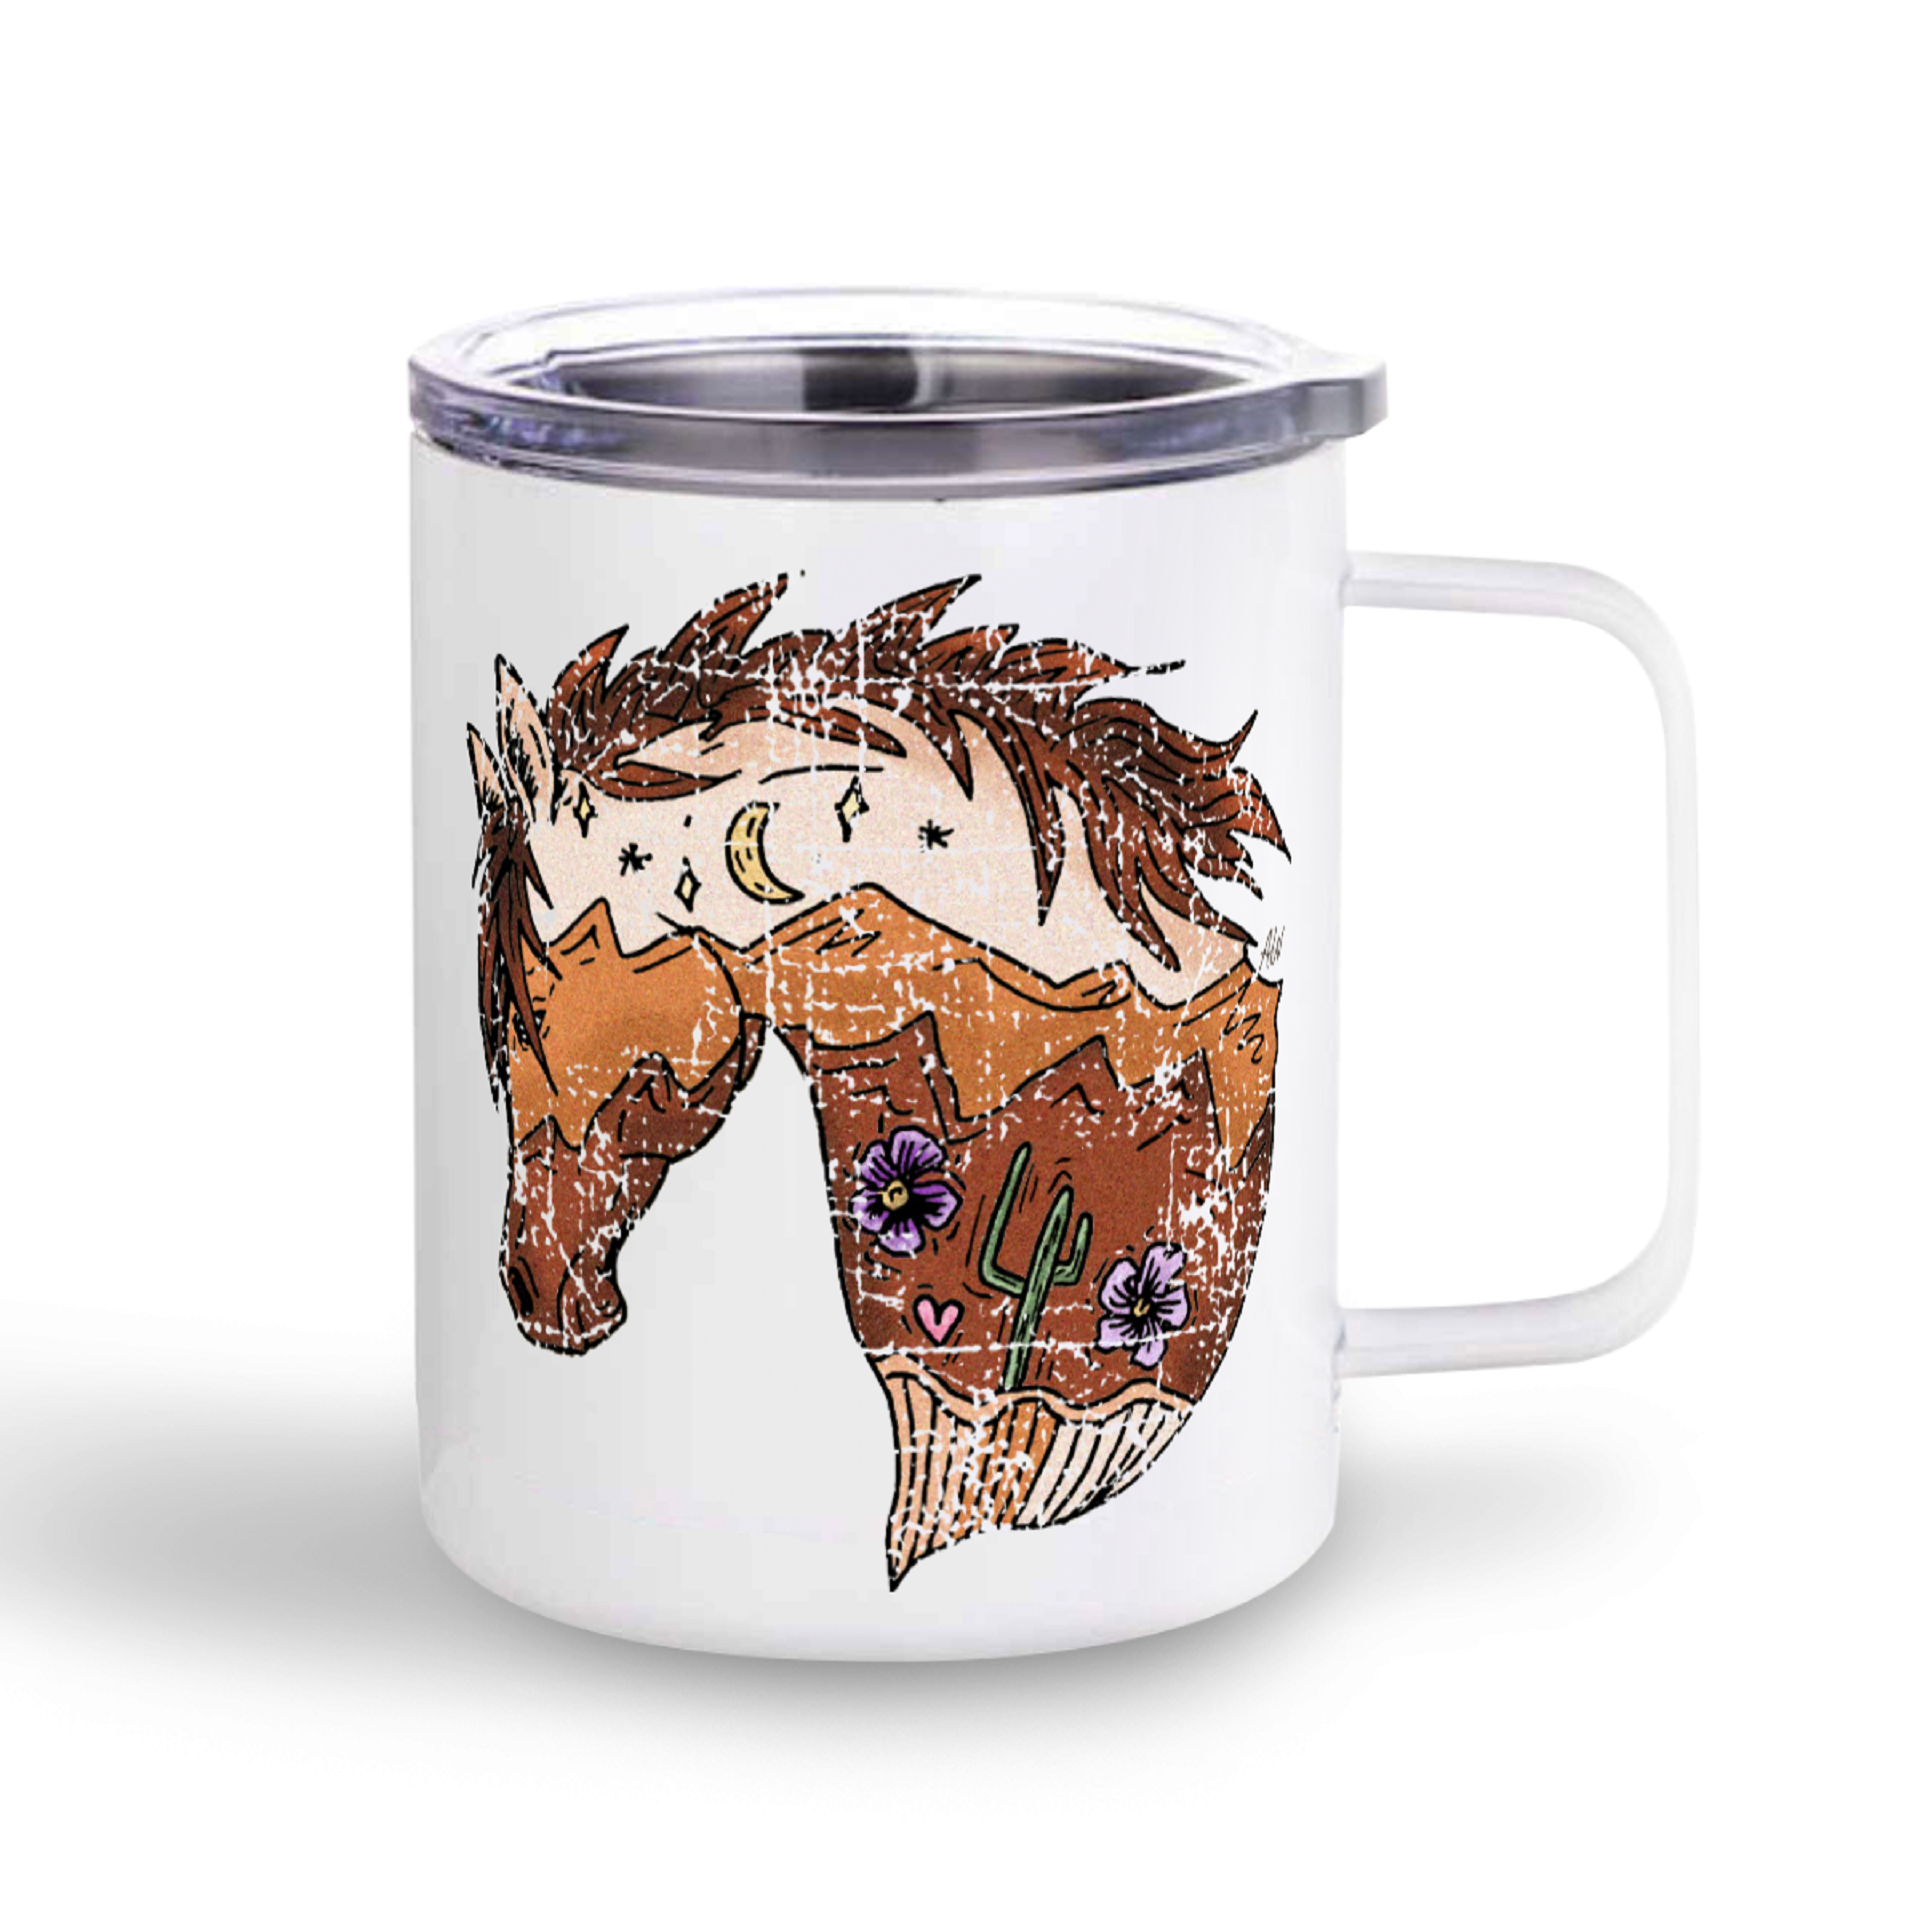 Rustic Pony Stainless Steel Mug